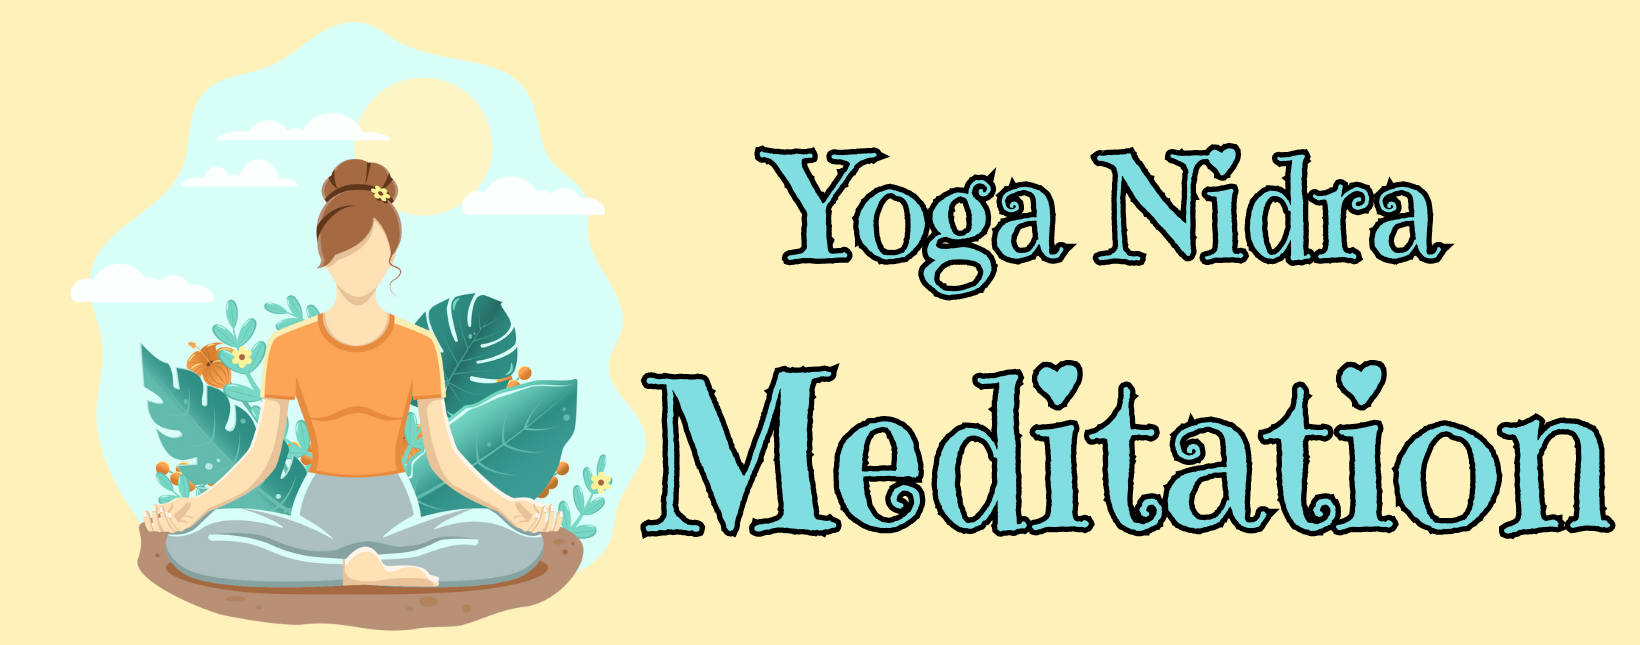 Yoga Nidra Meditation - 4 träffar - Start 21 feb kl. 17.30